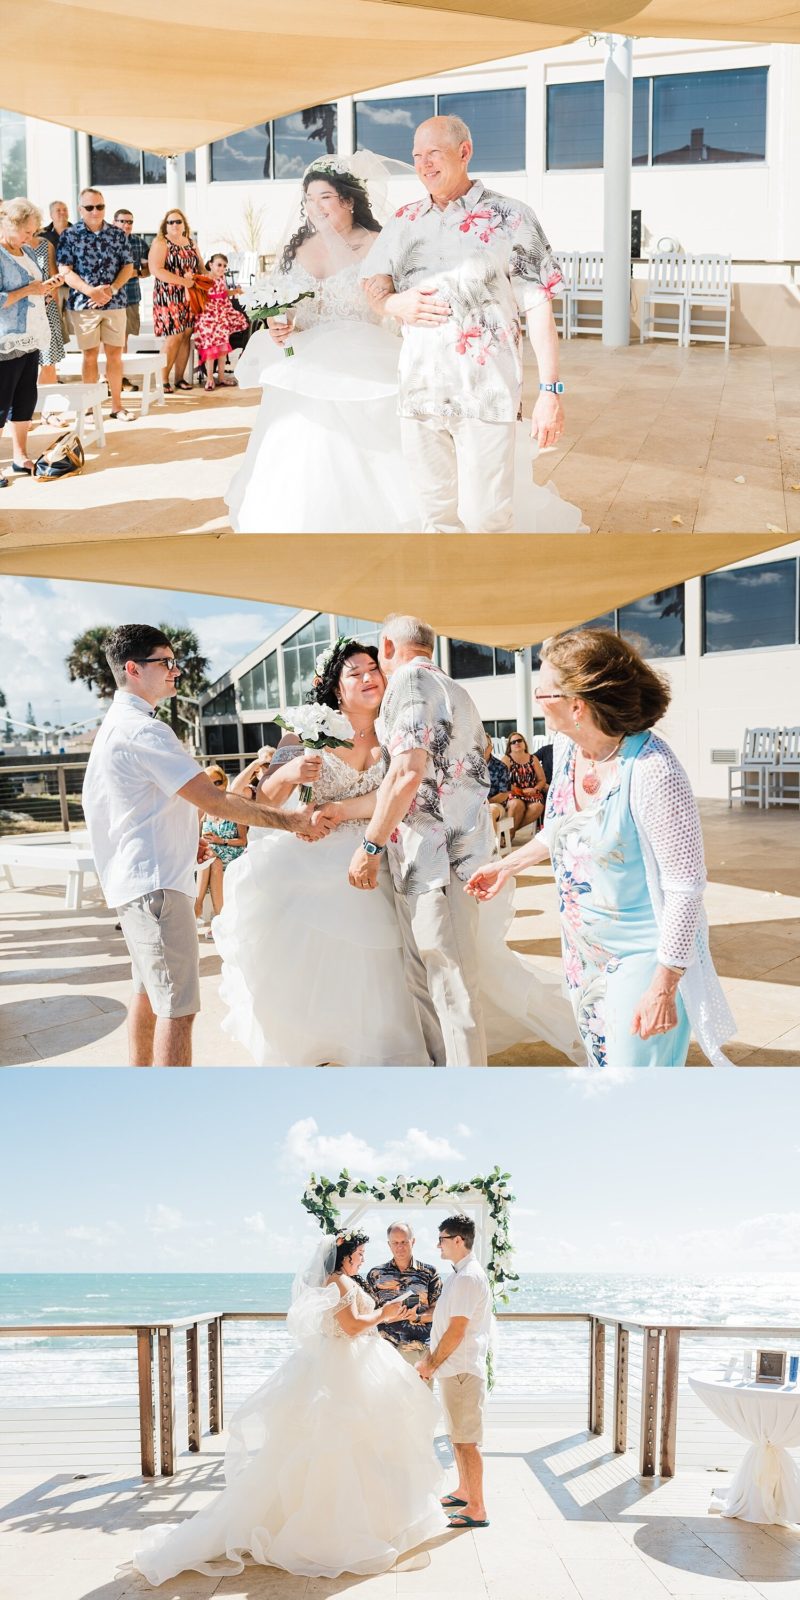 A sunny morning beach wedding ceremony in cocoa, fl